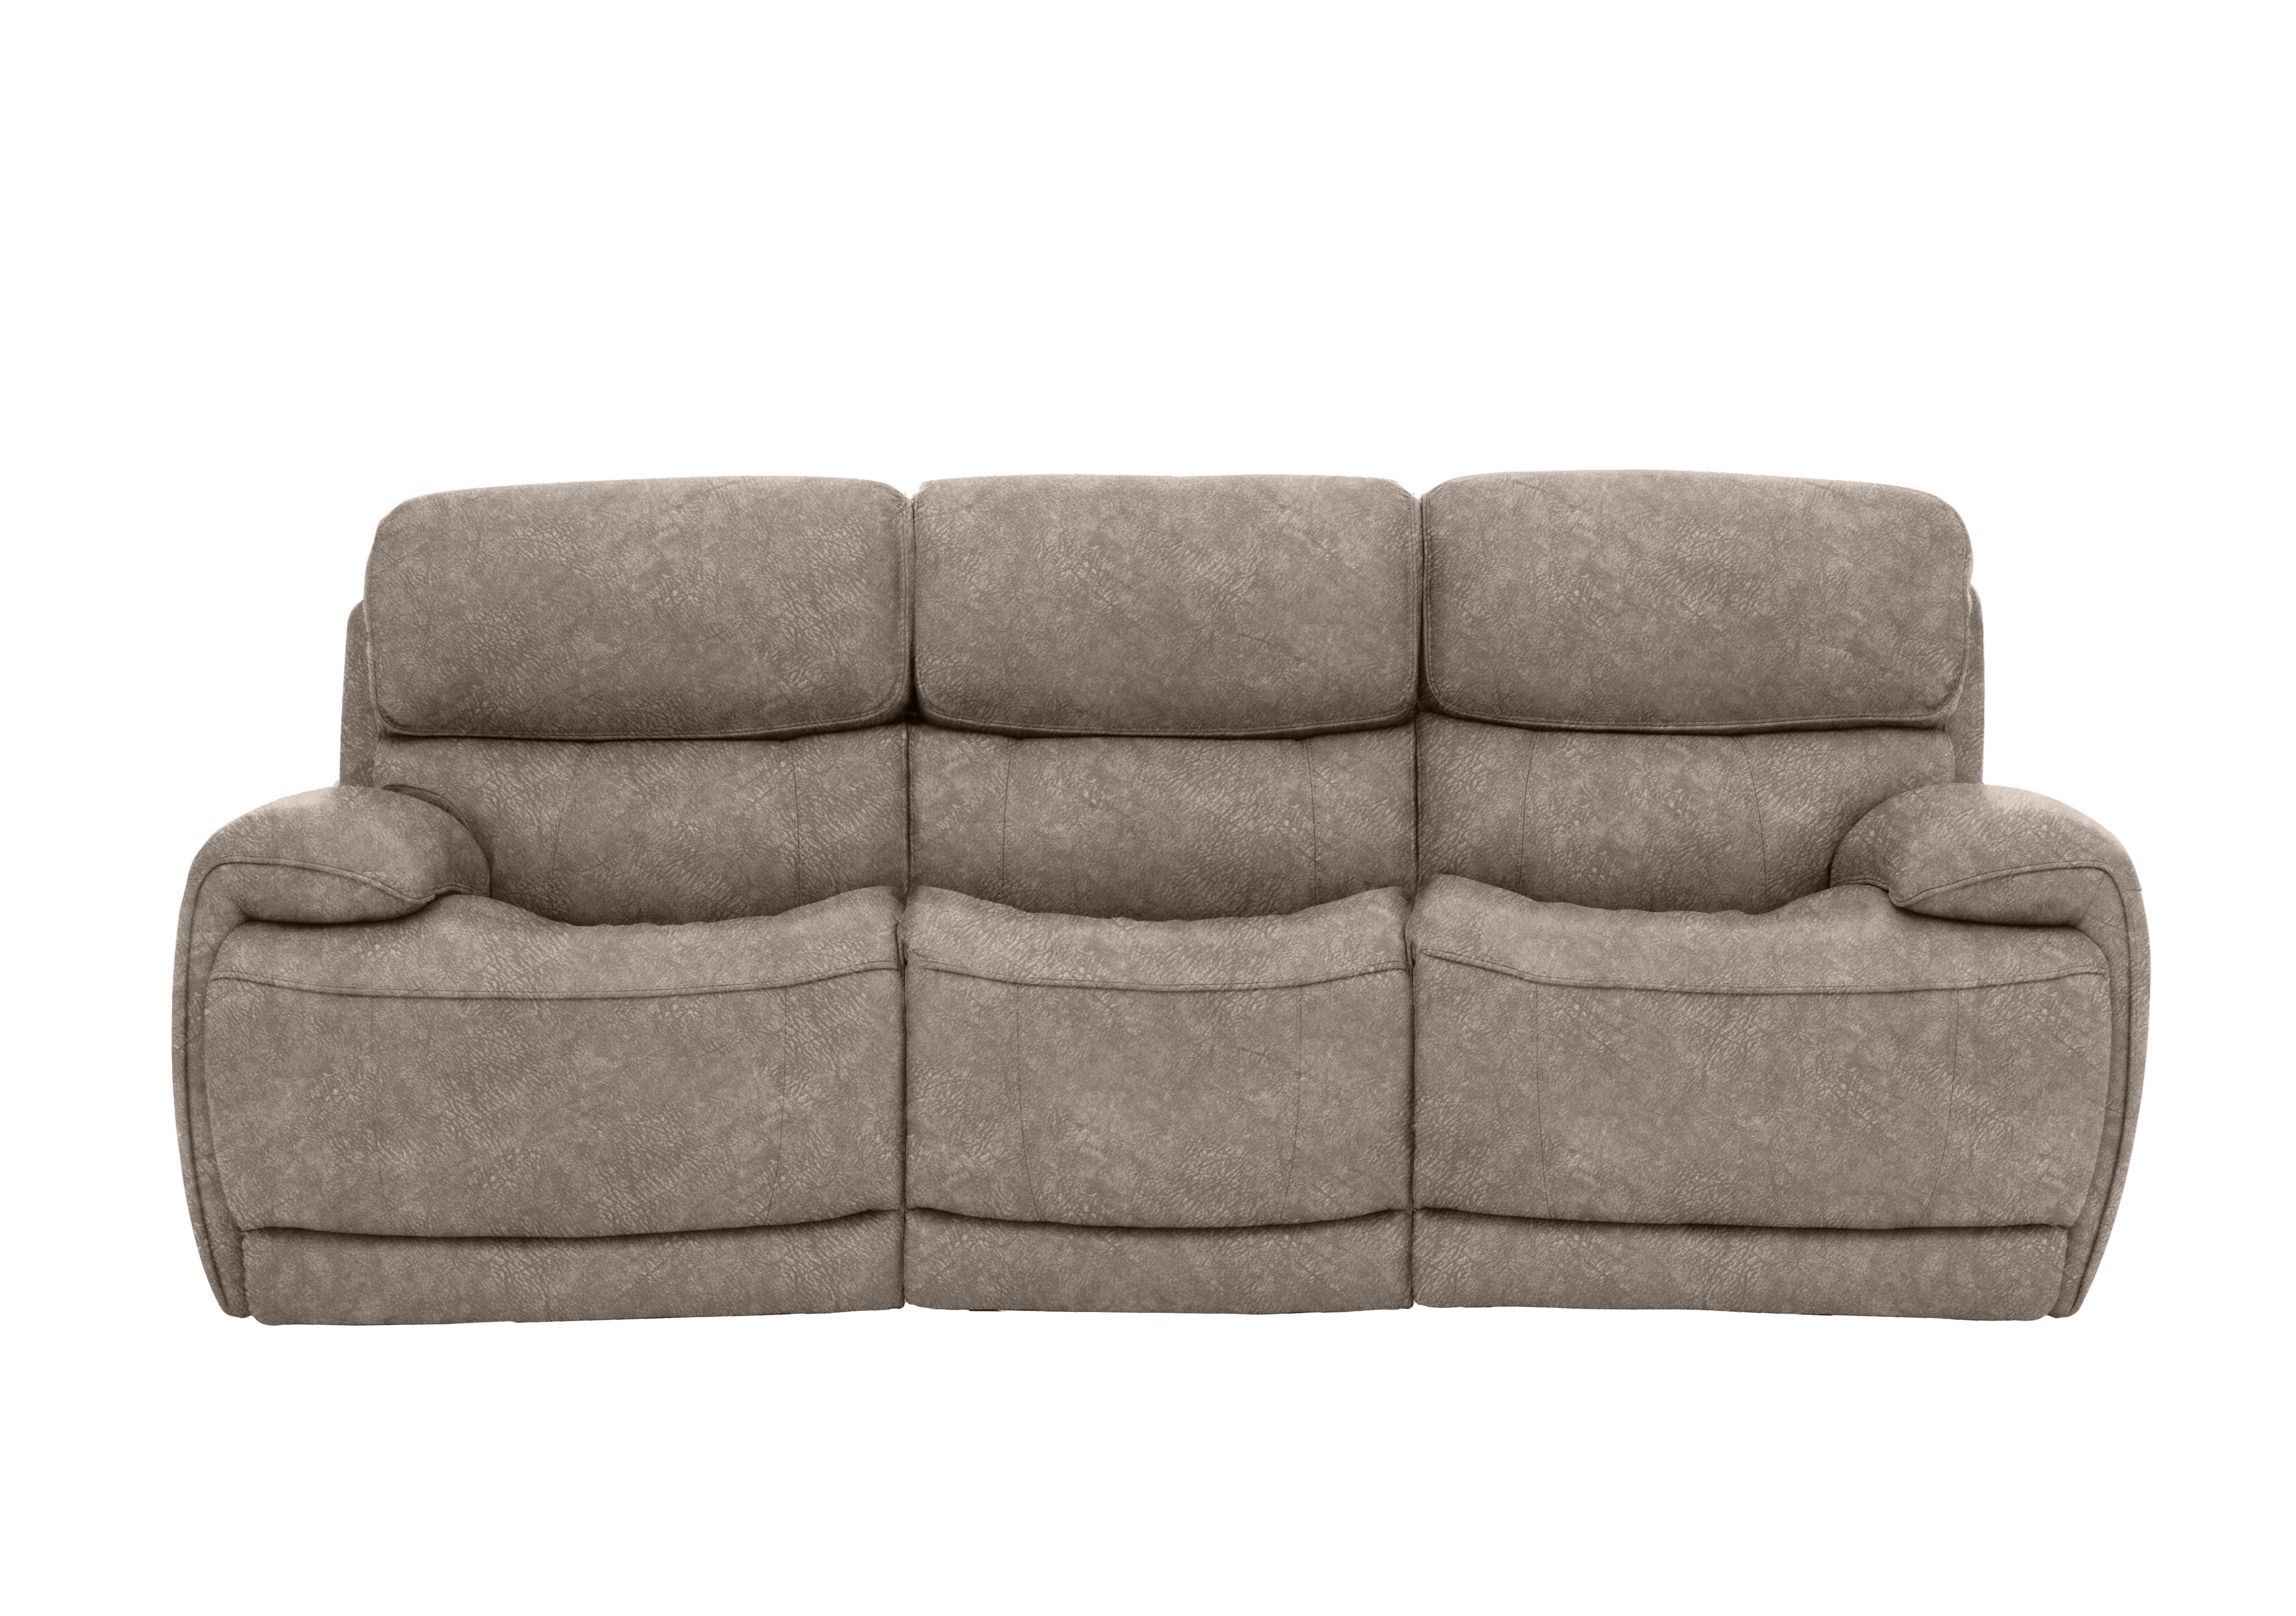 Rocco 3 Seater Fabric Power Rocker Sofa with Power Headrests in Bfa-Bnn-R29 Fv1 Mink on Furniture Village